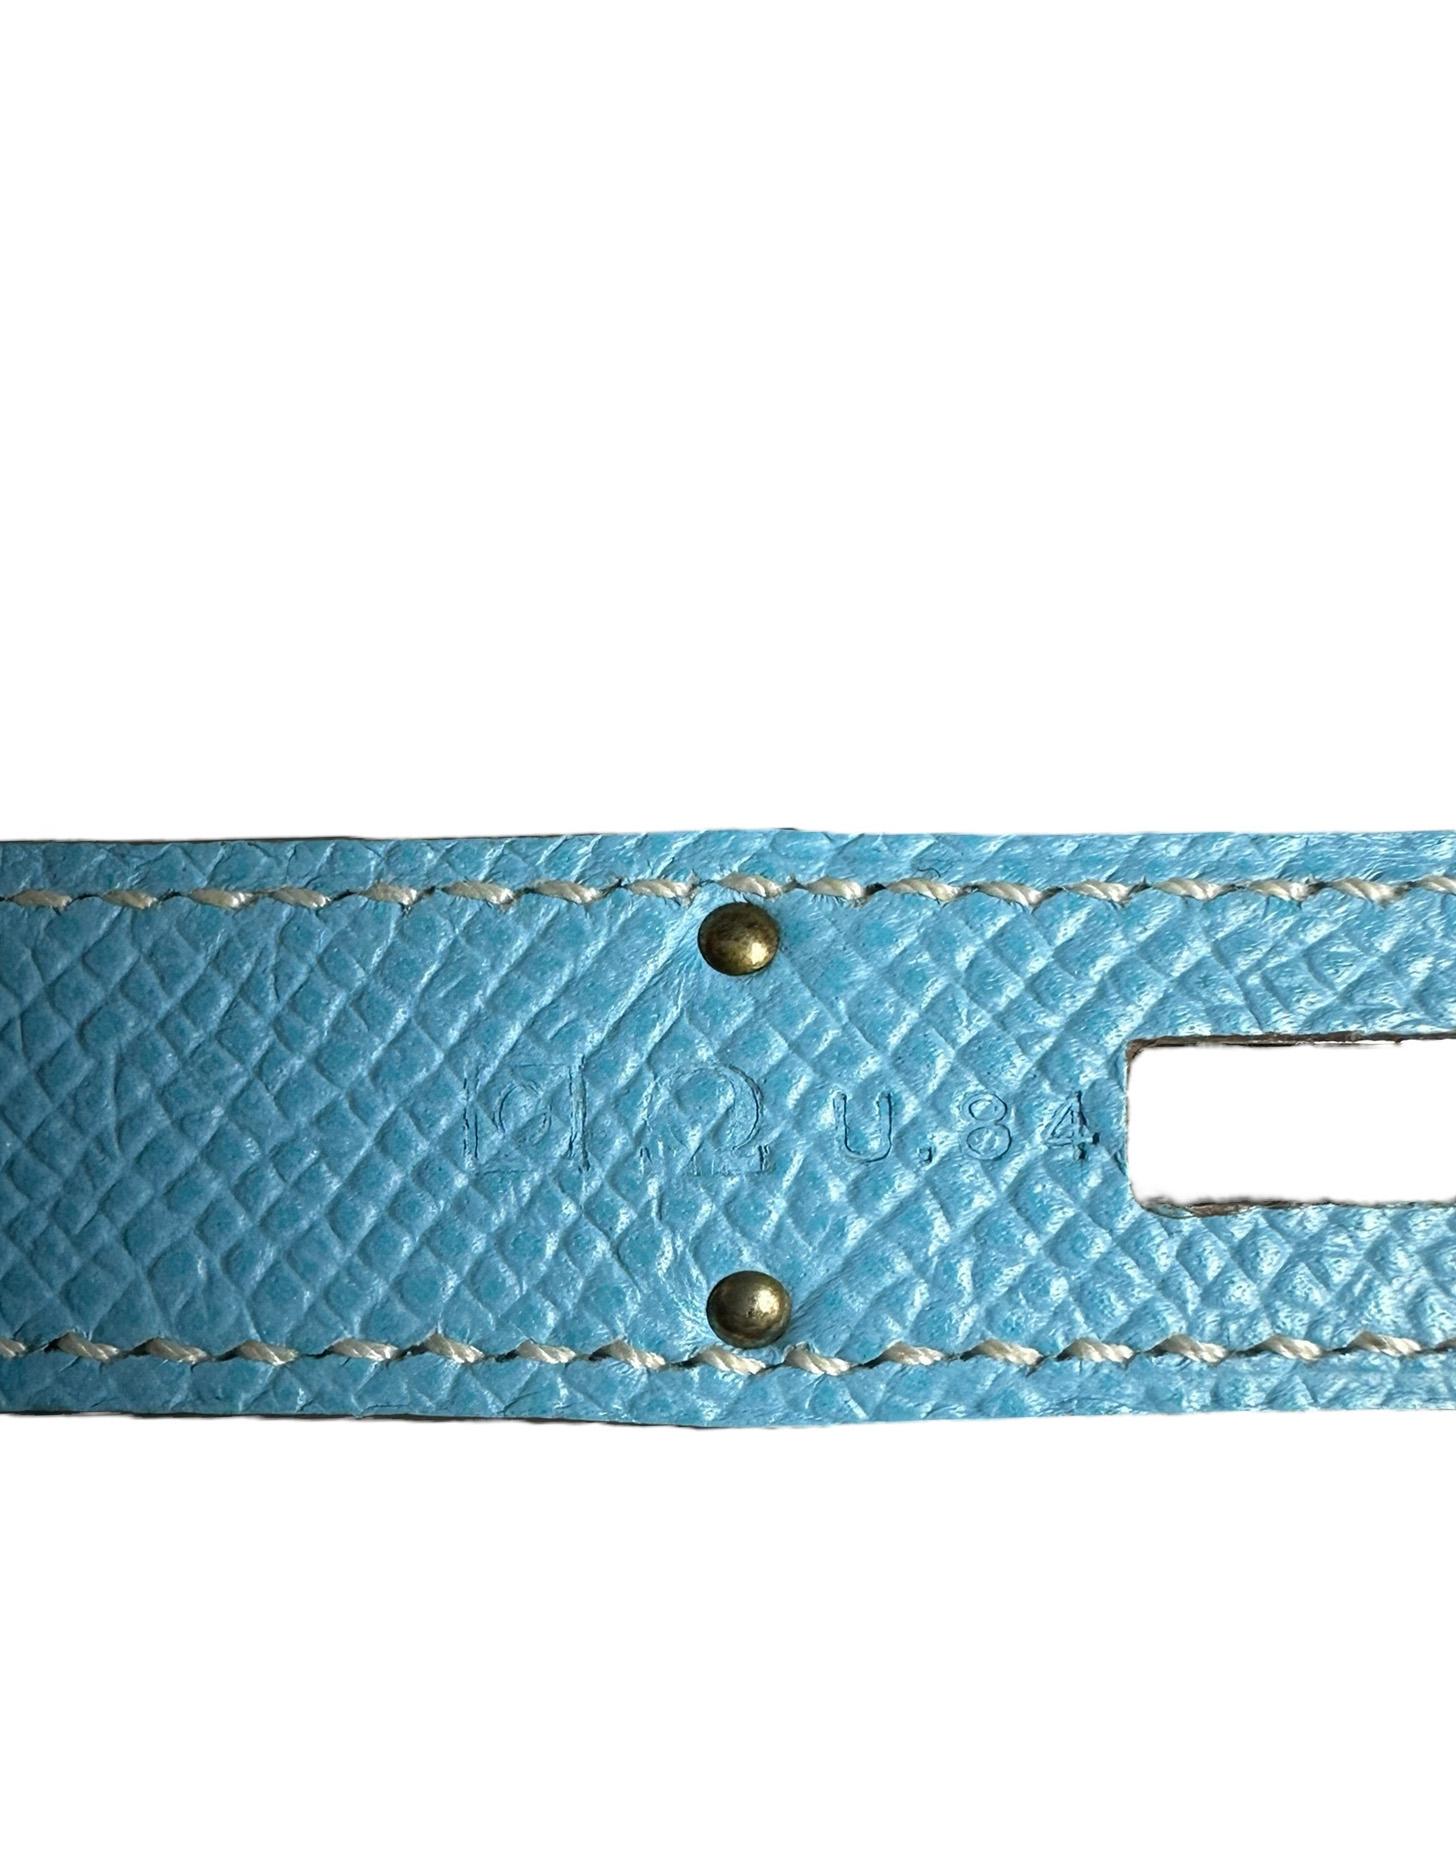 Hermes Bleu Celeste/ Mykonos Epsom Leather Candy Birkin Bag 30cm PHW 7